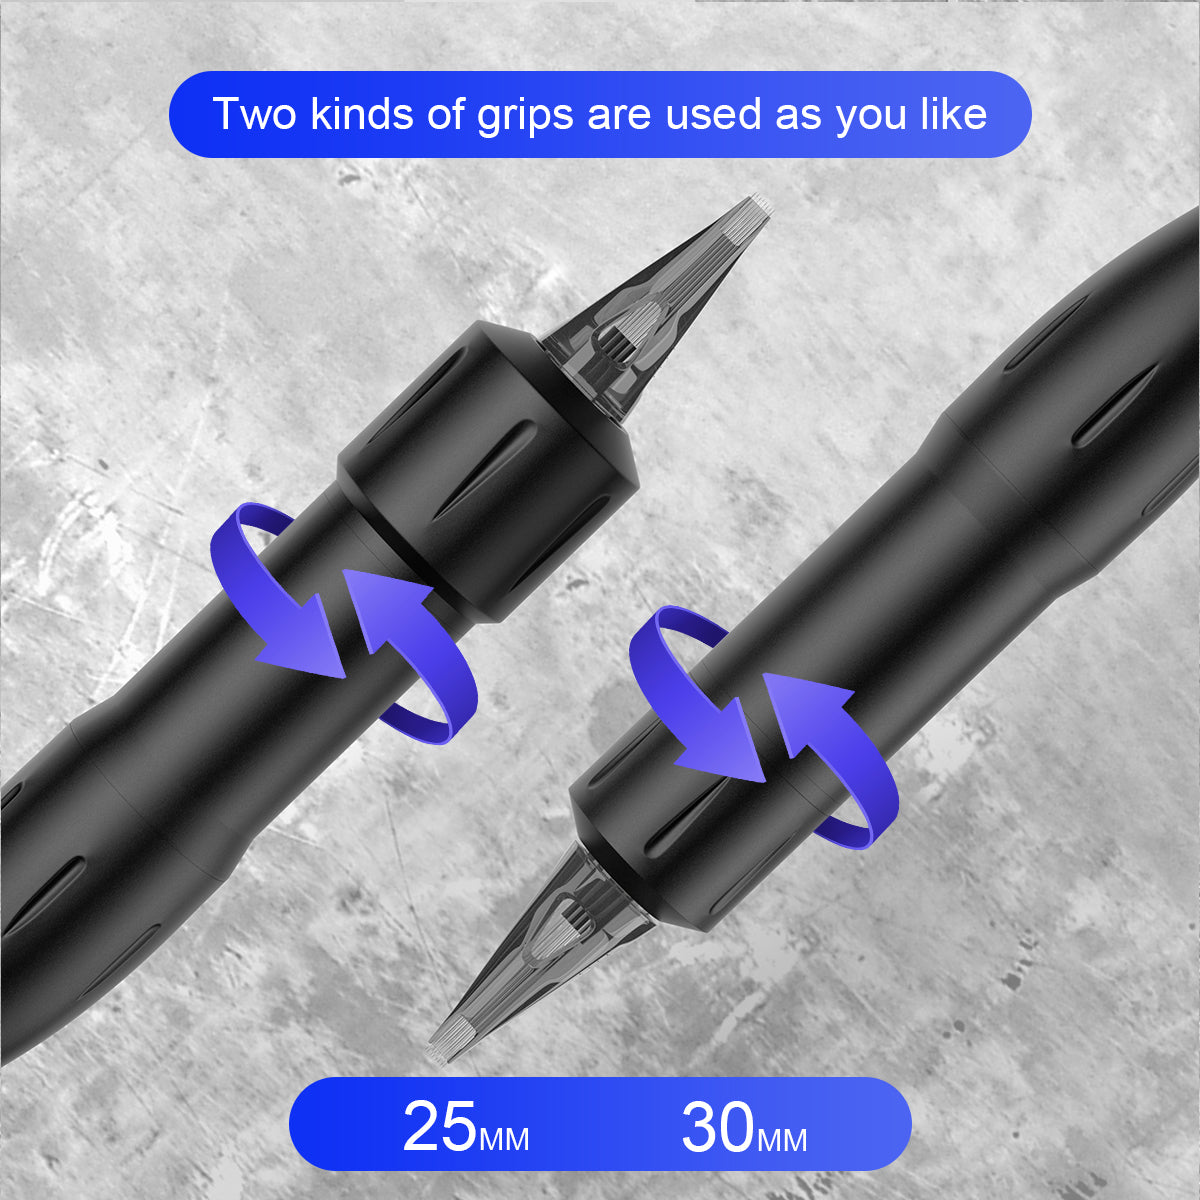 JOSI Bullet Tattoo Machine Cartridge Pen